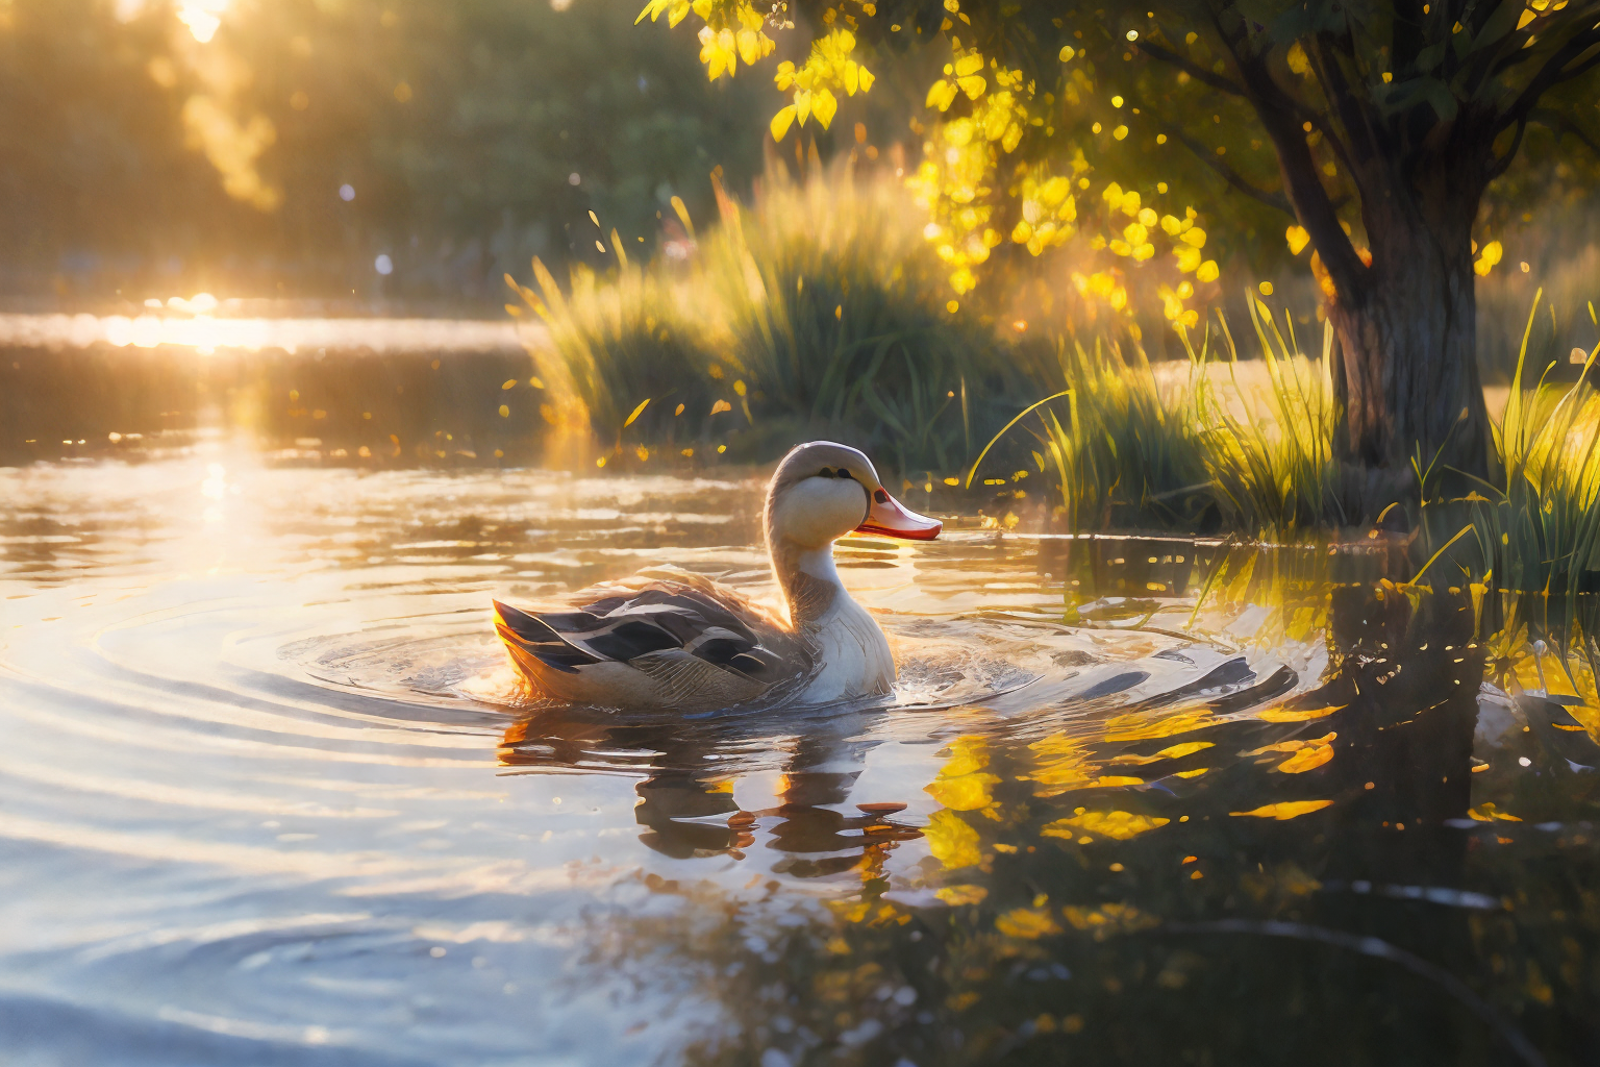 野鸭子/Cute duck Lora image by 0_vortex